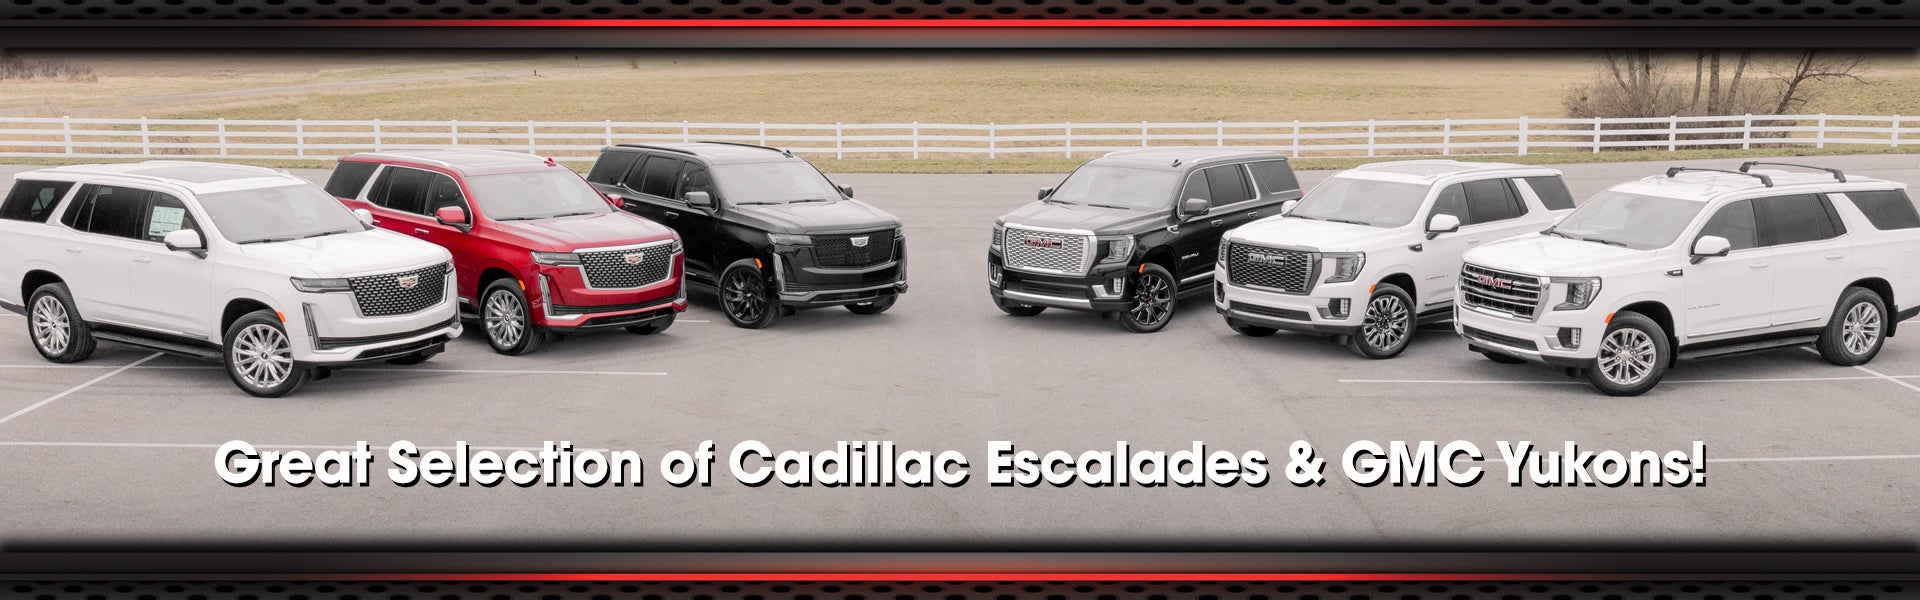 Escalades & Yukons @ Performance GMC Cadillac